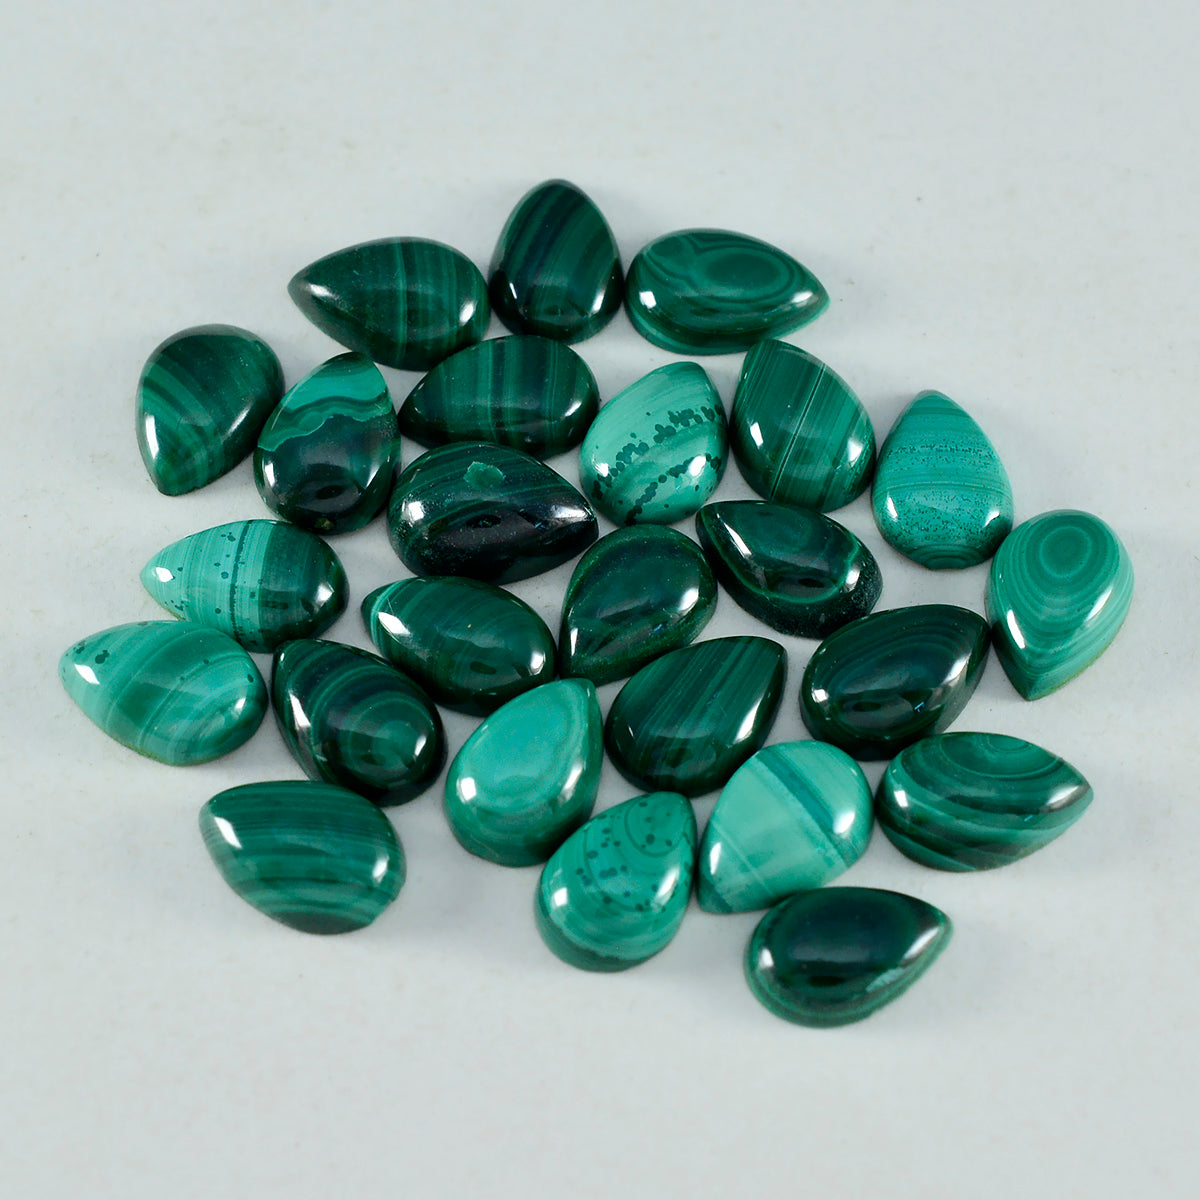 Riyogems 1PC Green Malachite Cabochon 4x6 mm Pear Shape A+1 Quality Stone